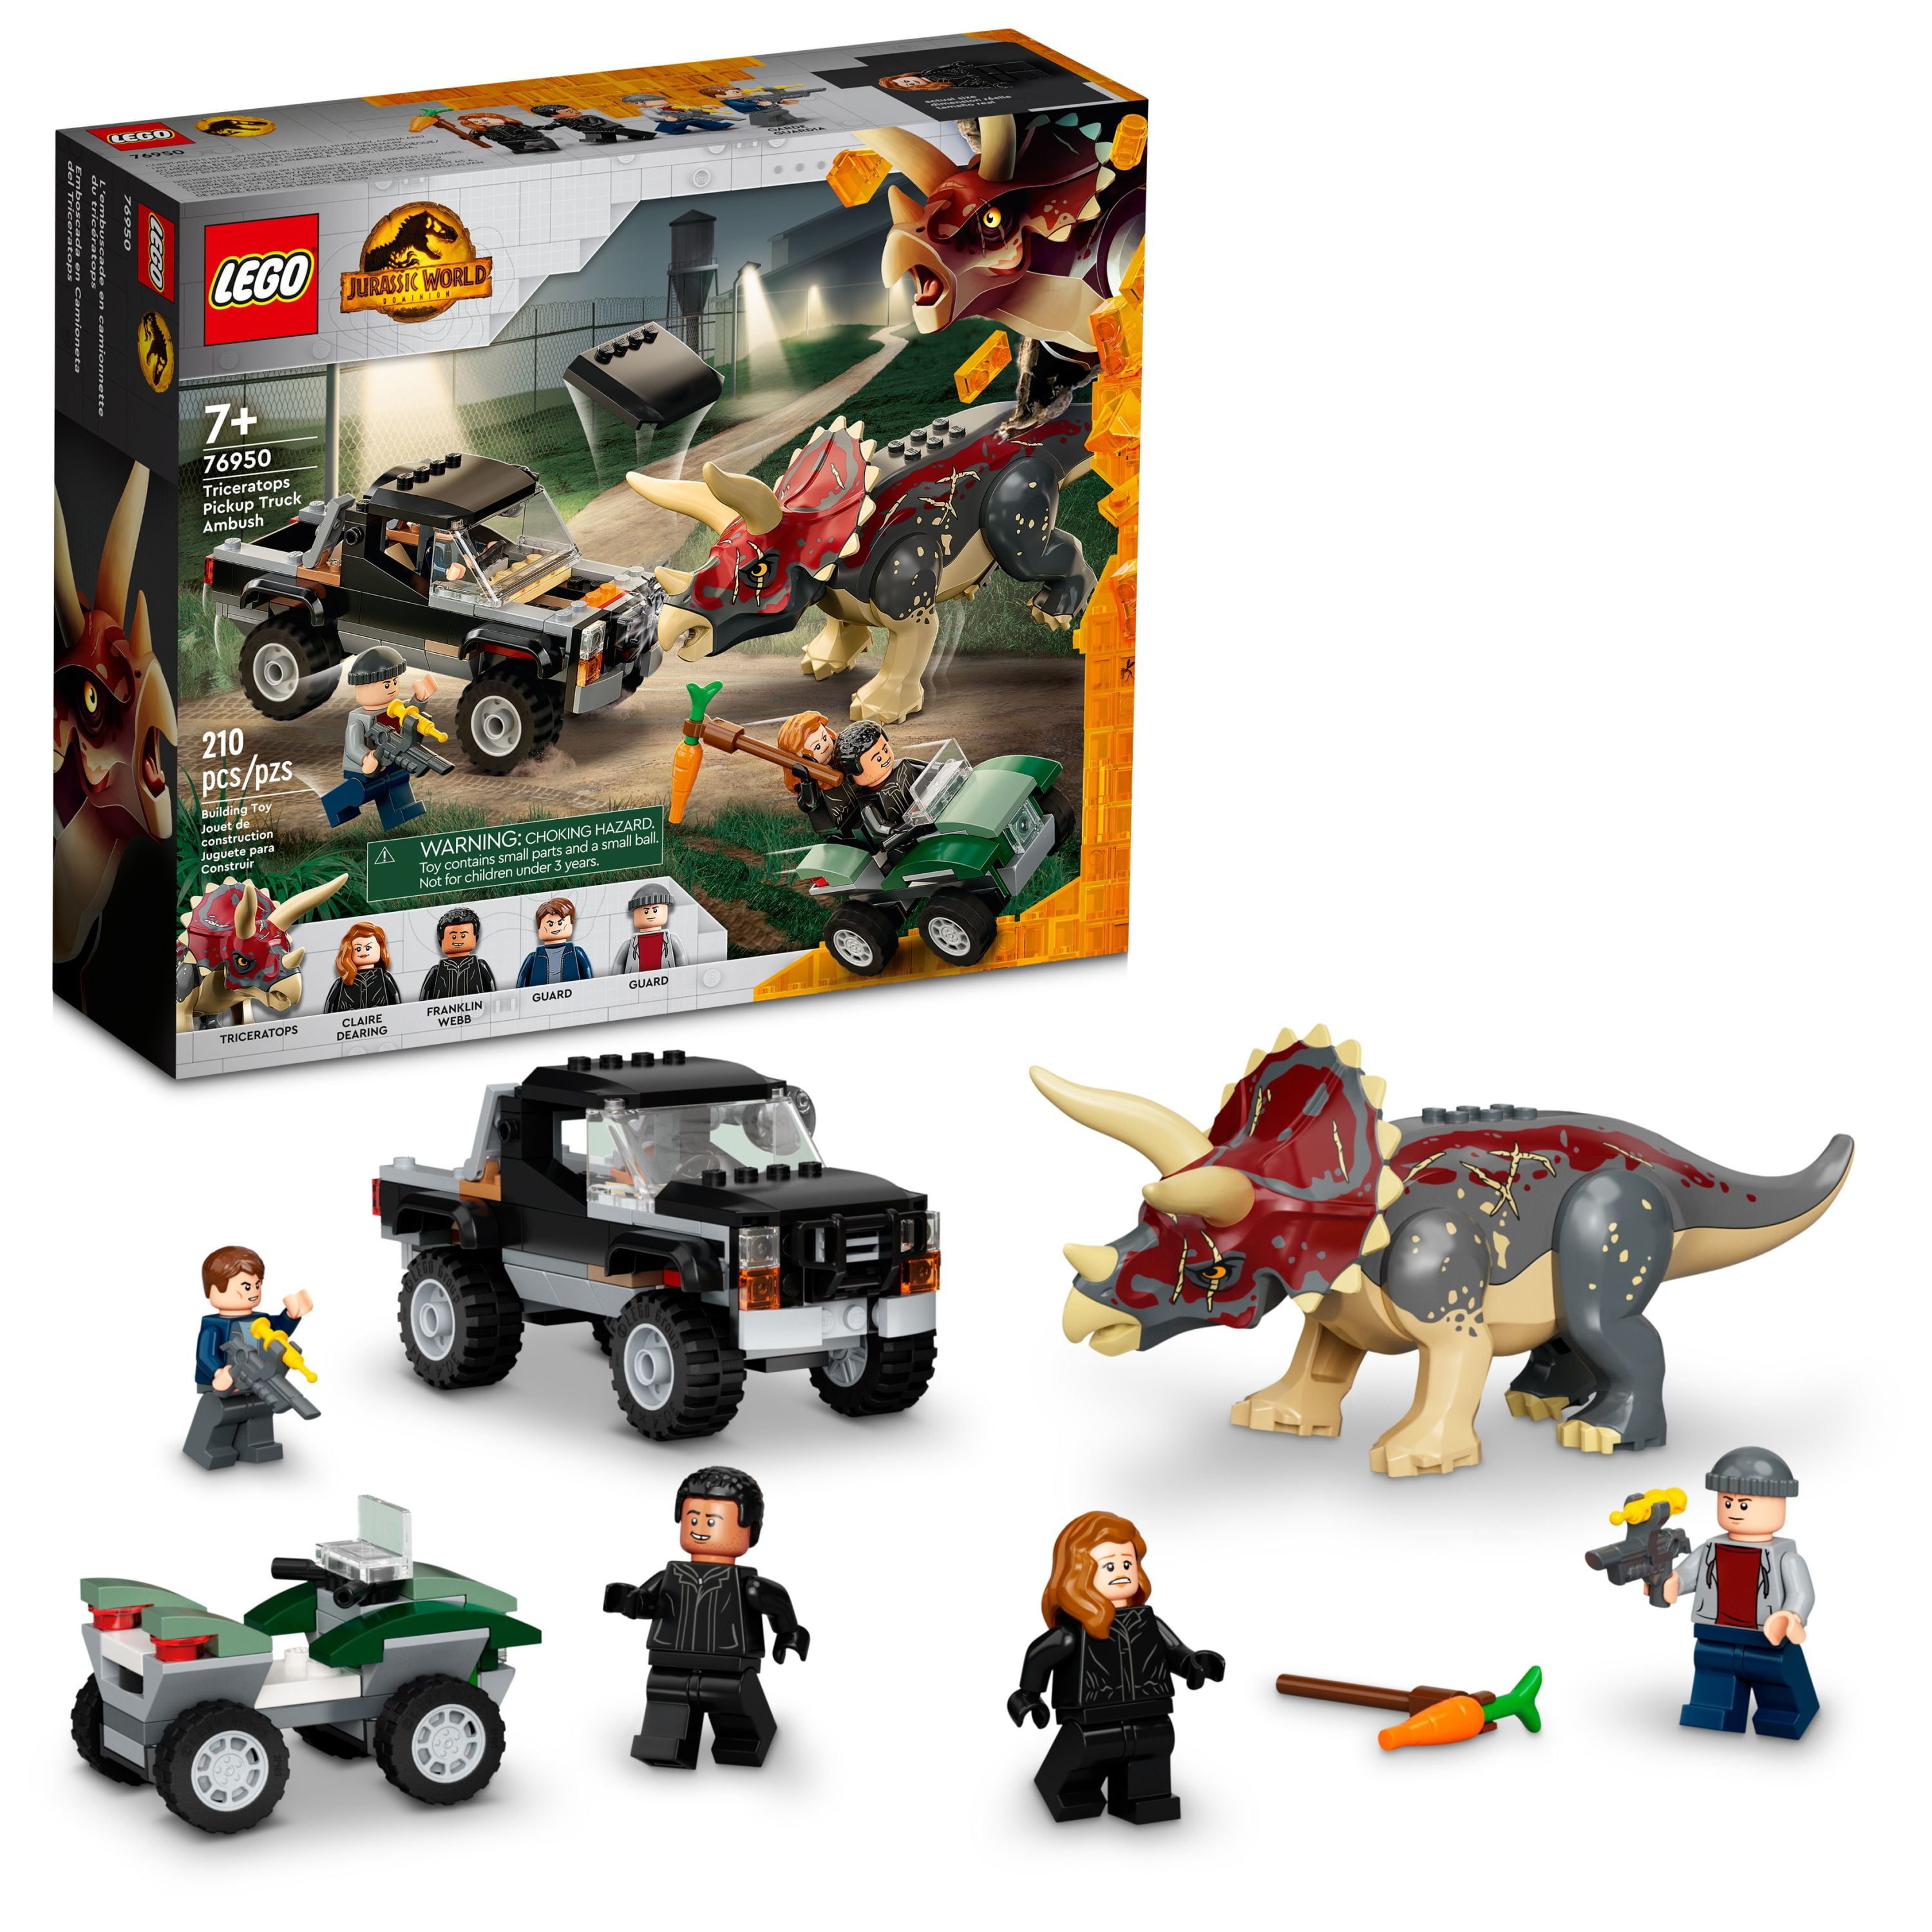 LEGO Jurassic World Dominion Triceratops Dinosaur Pickup Truck Ambush 76950 (210 Pieces)